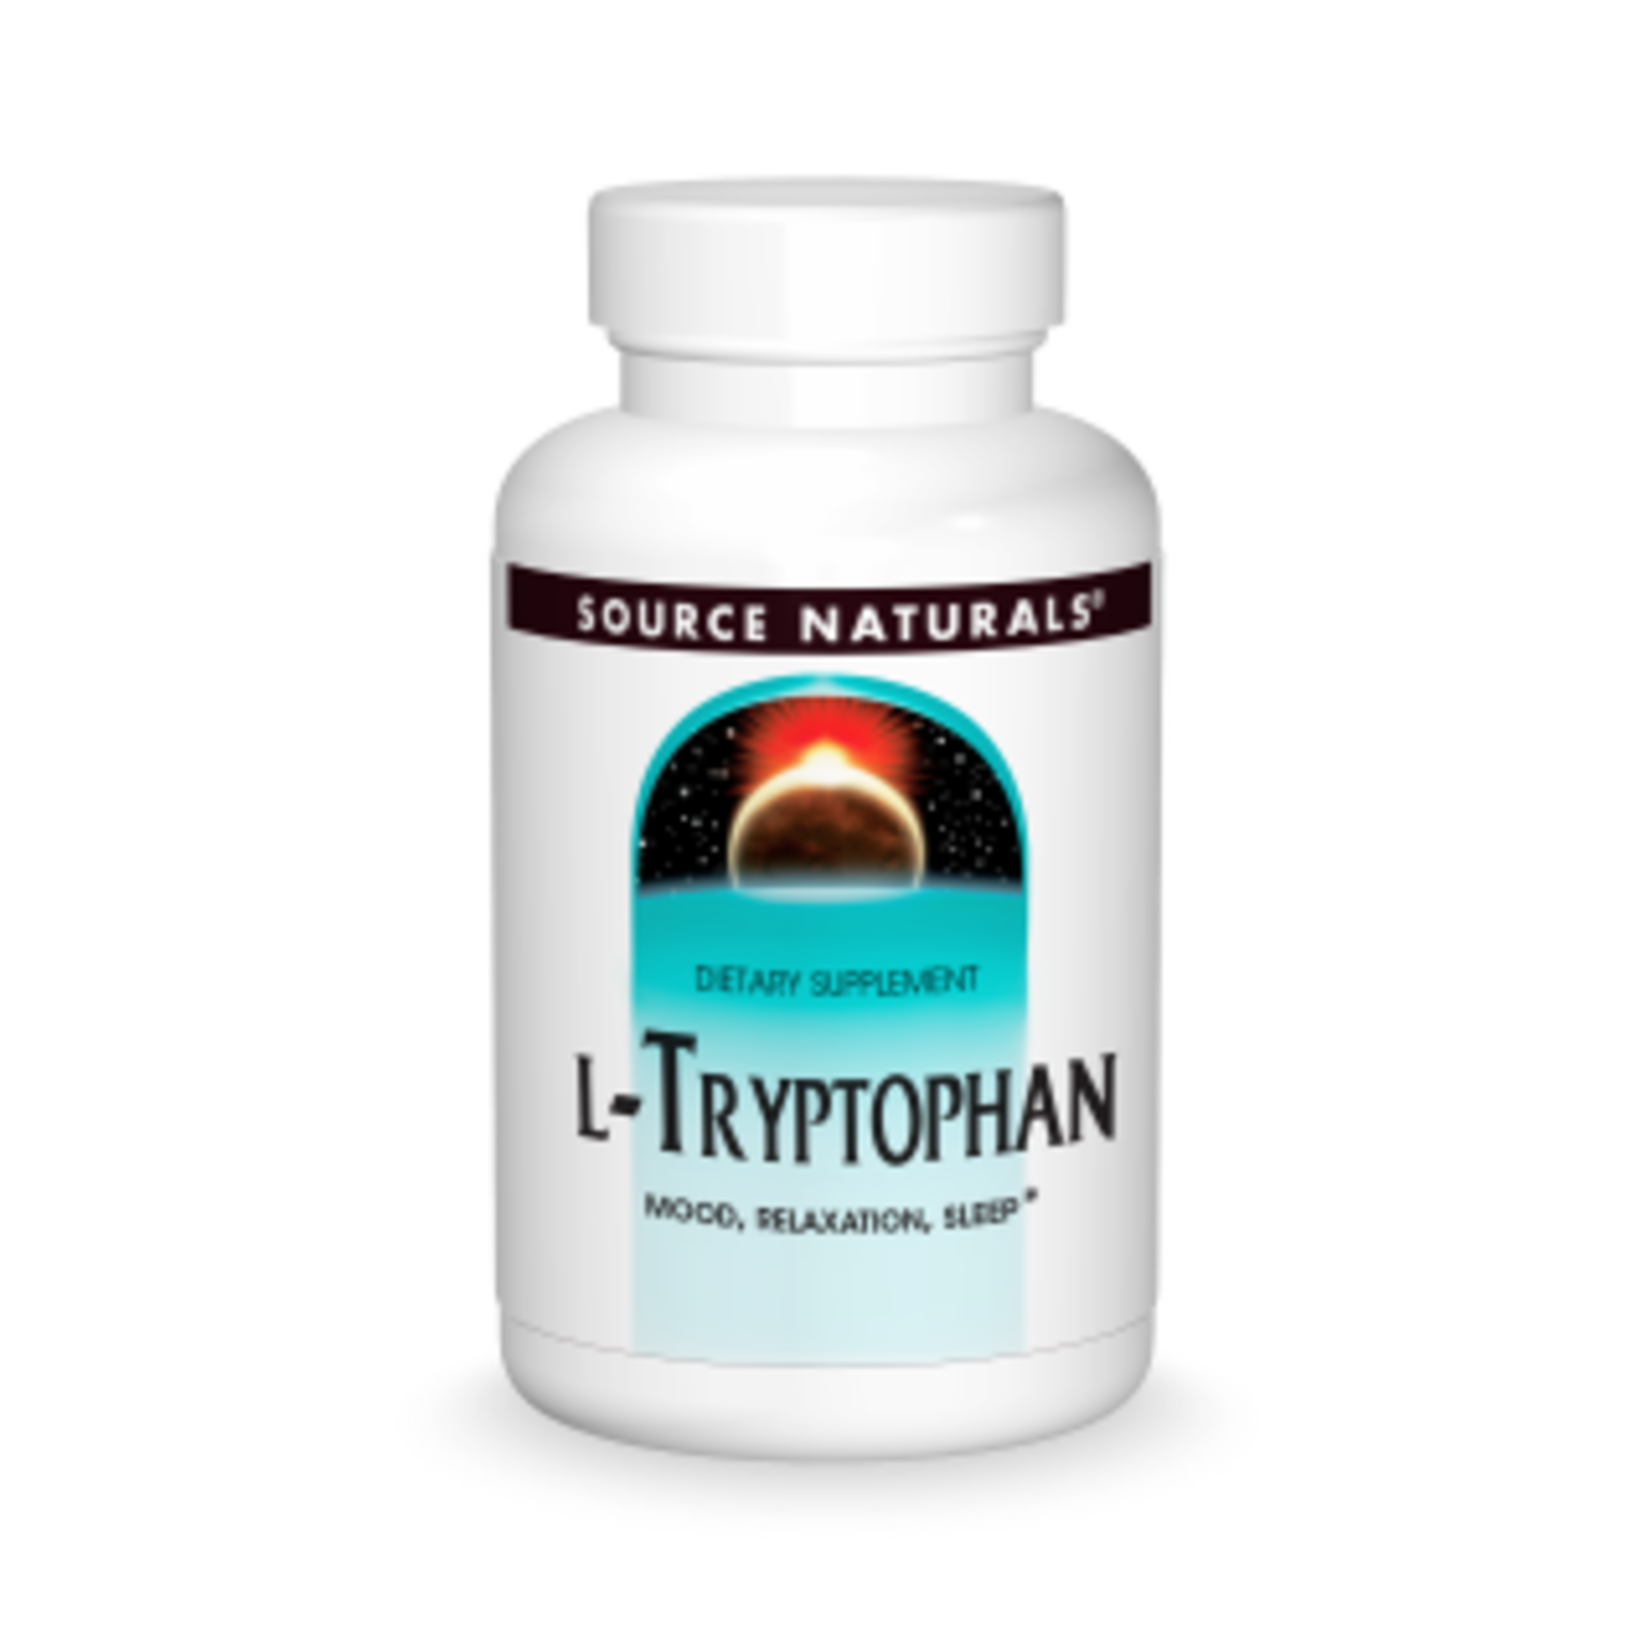 Source Naturals Source Naturals - L-Tryptophan 500 mg - 30 Capsules